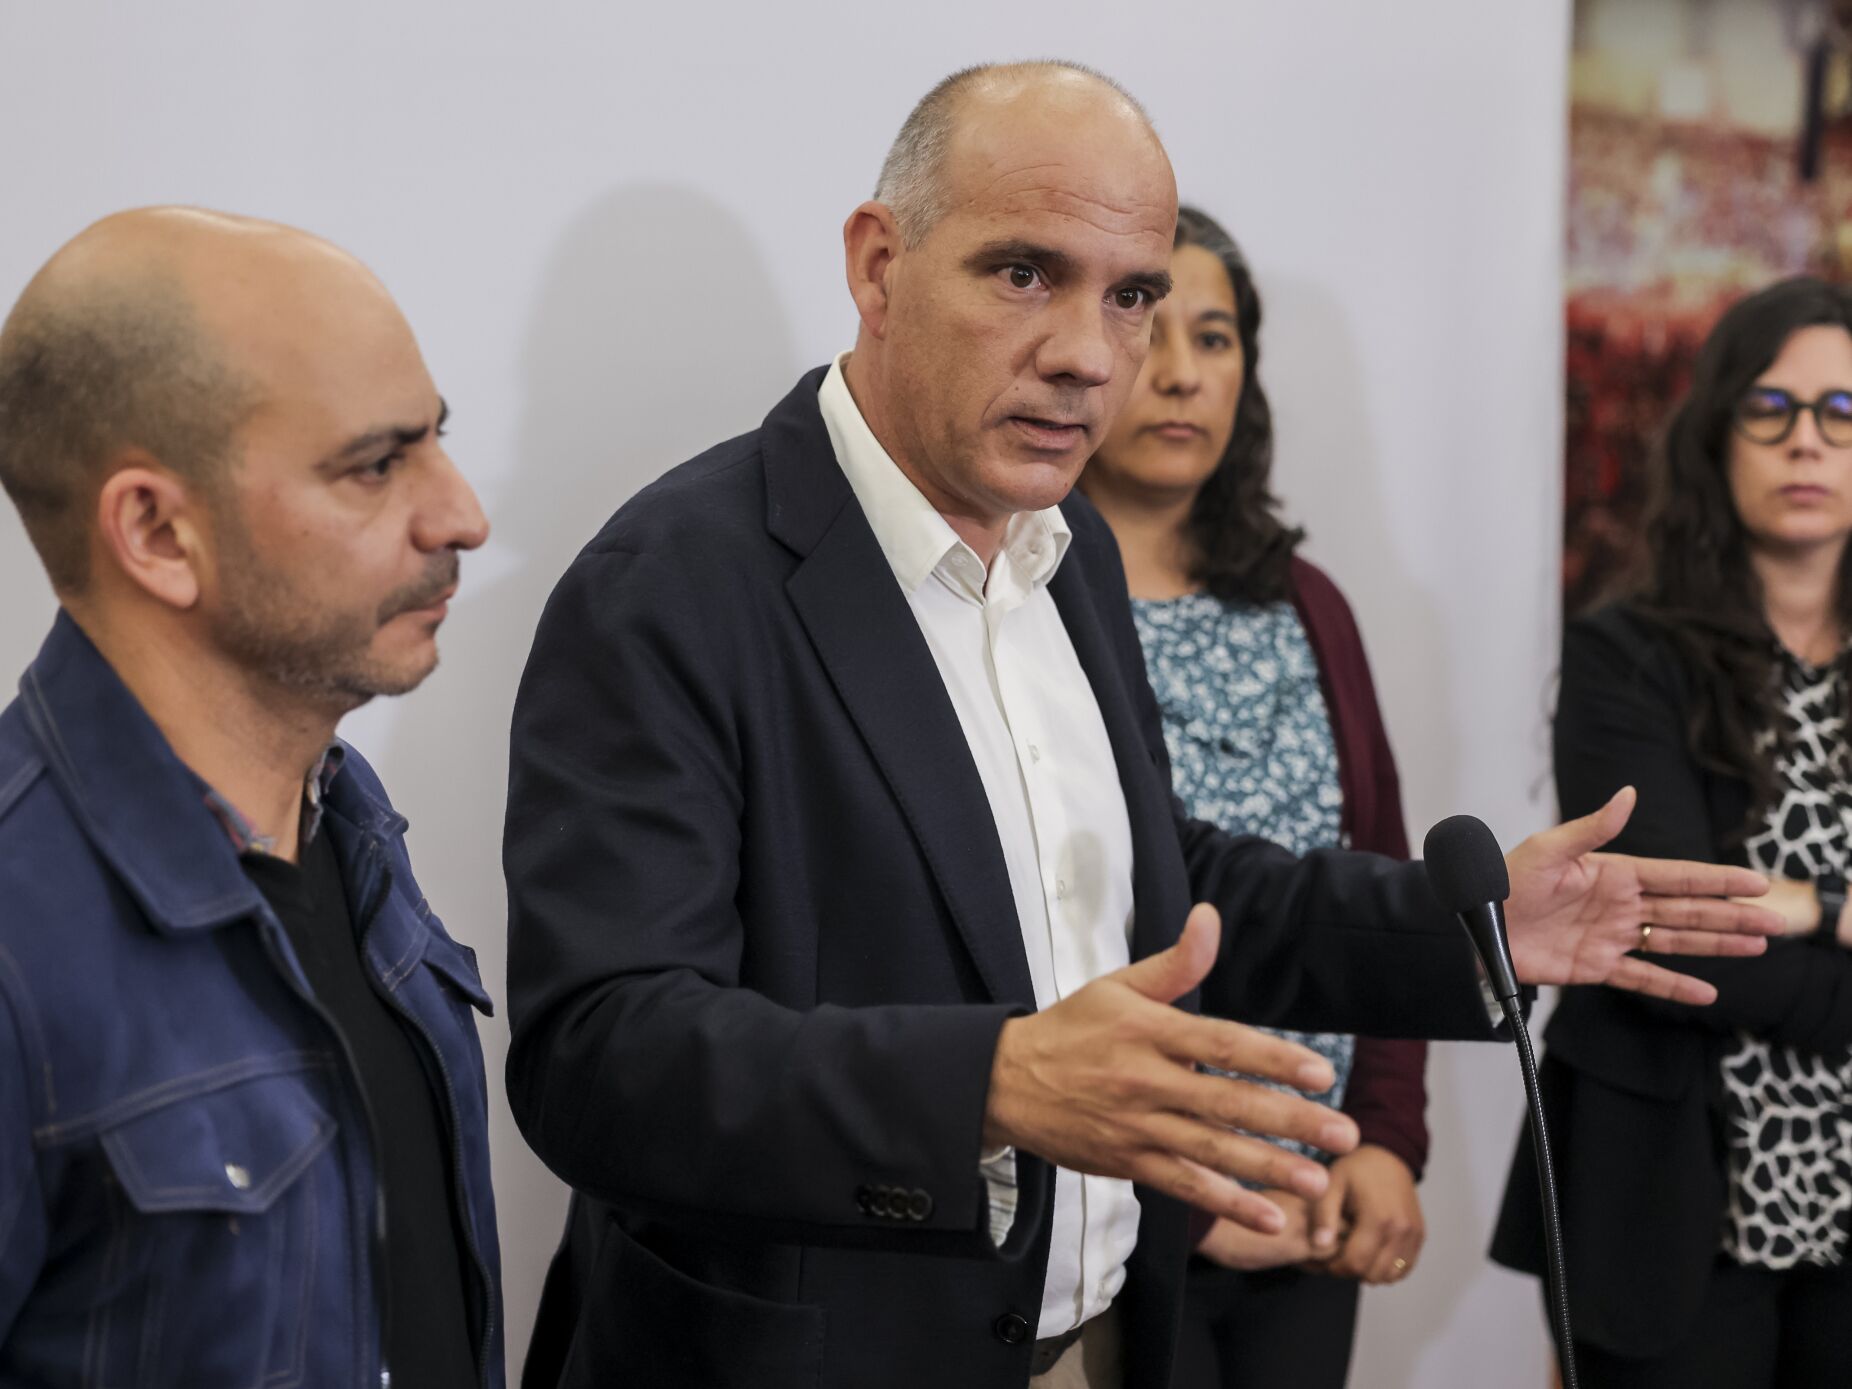 Paulo Raimundo adverte que anda "monstro à solta" após ataques a imigrantes